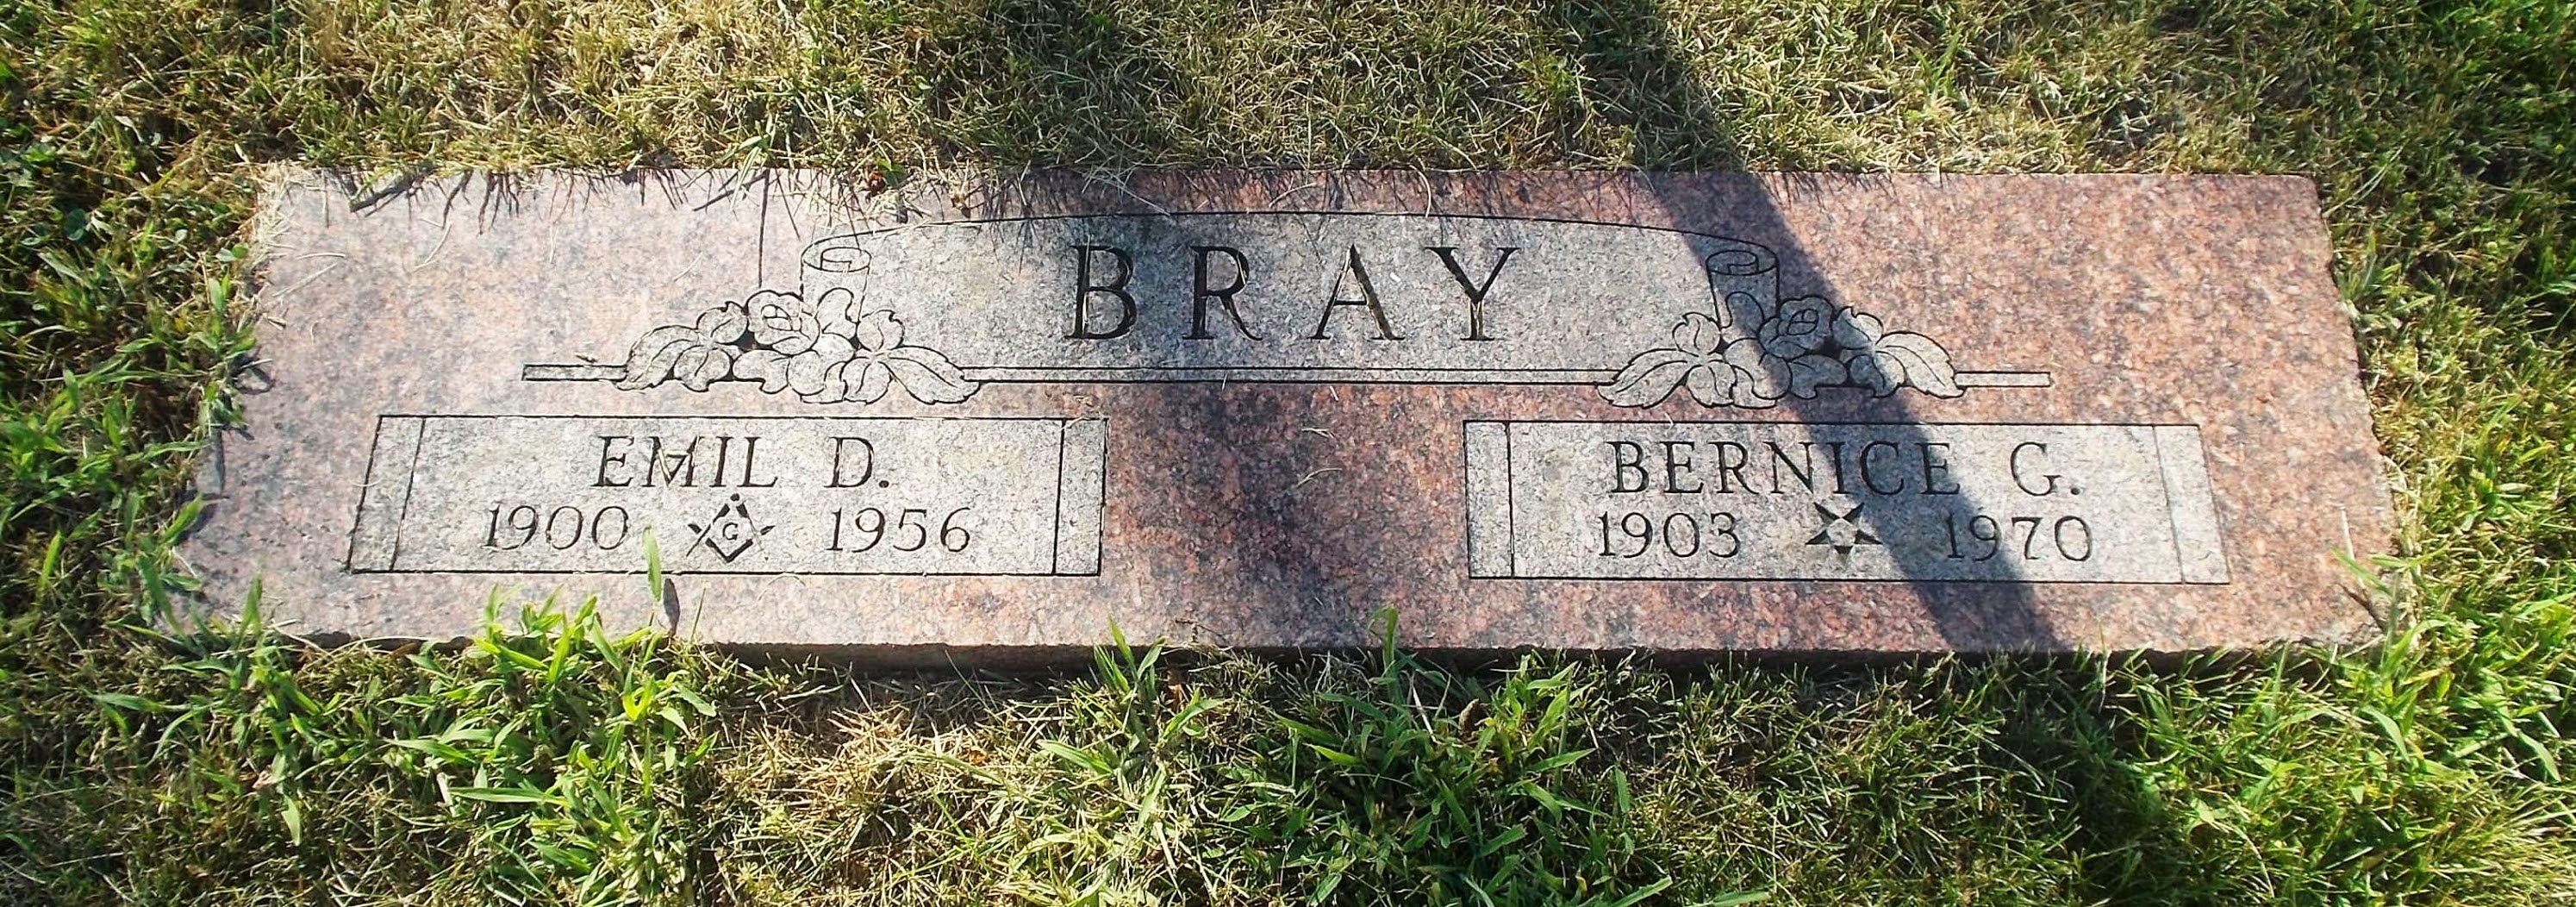 Emil D Bray